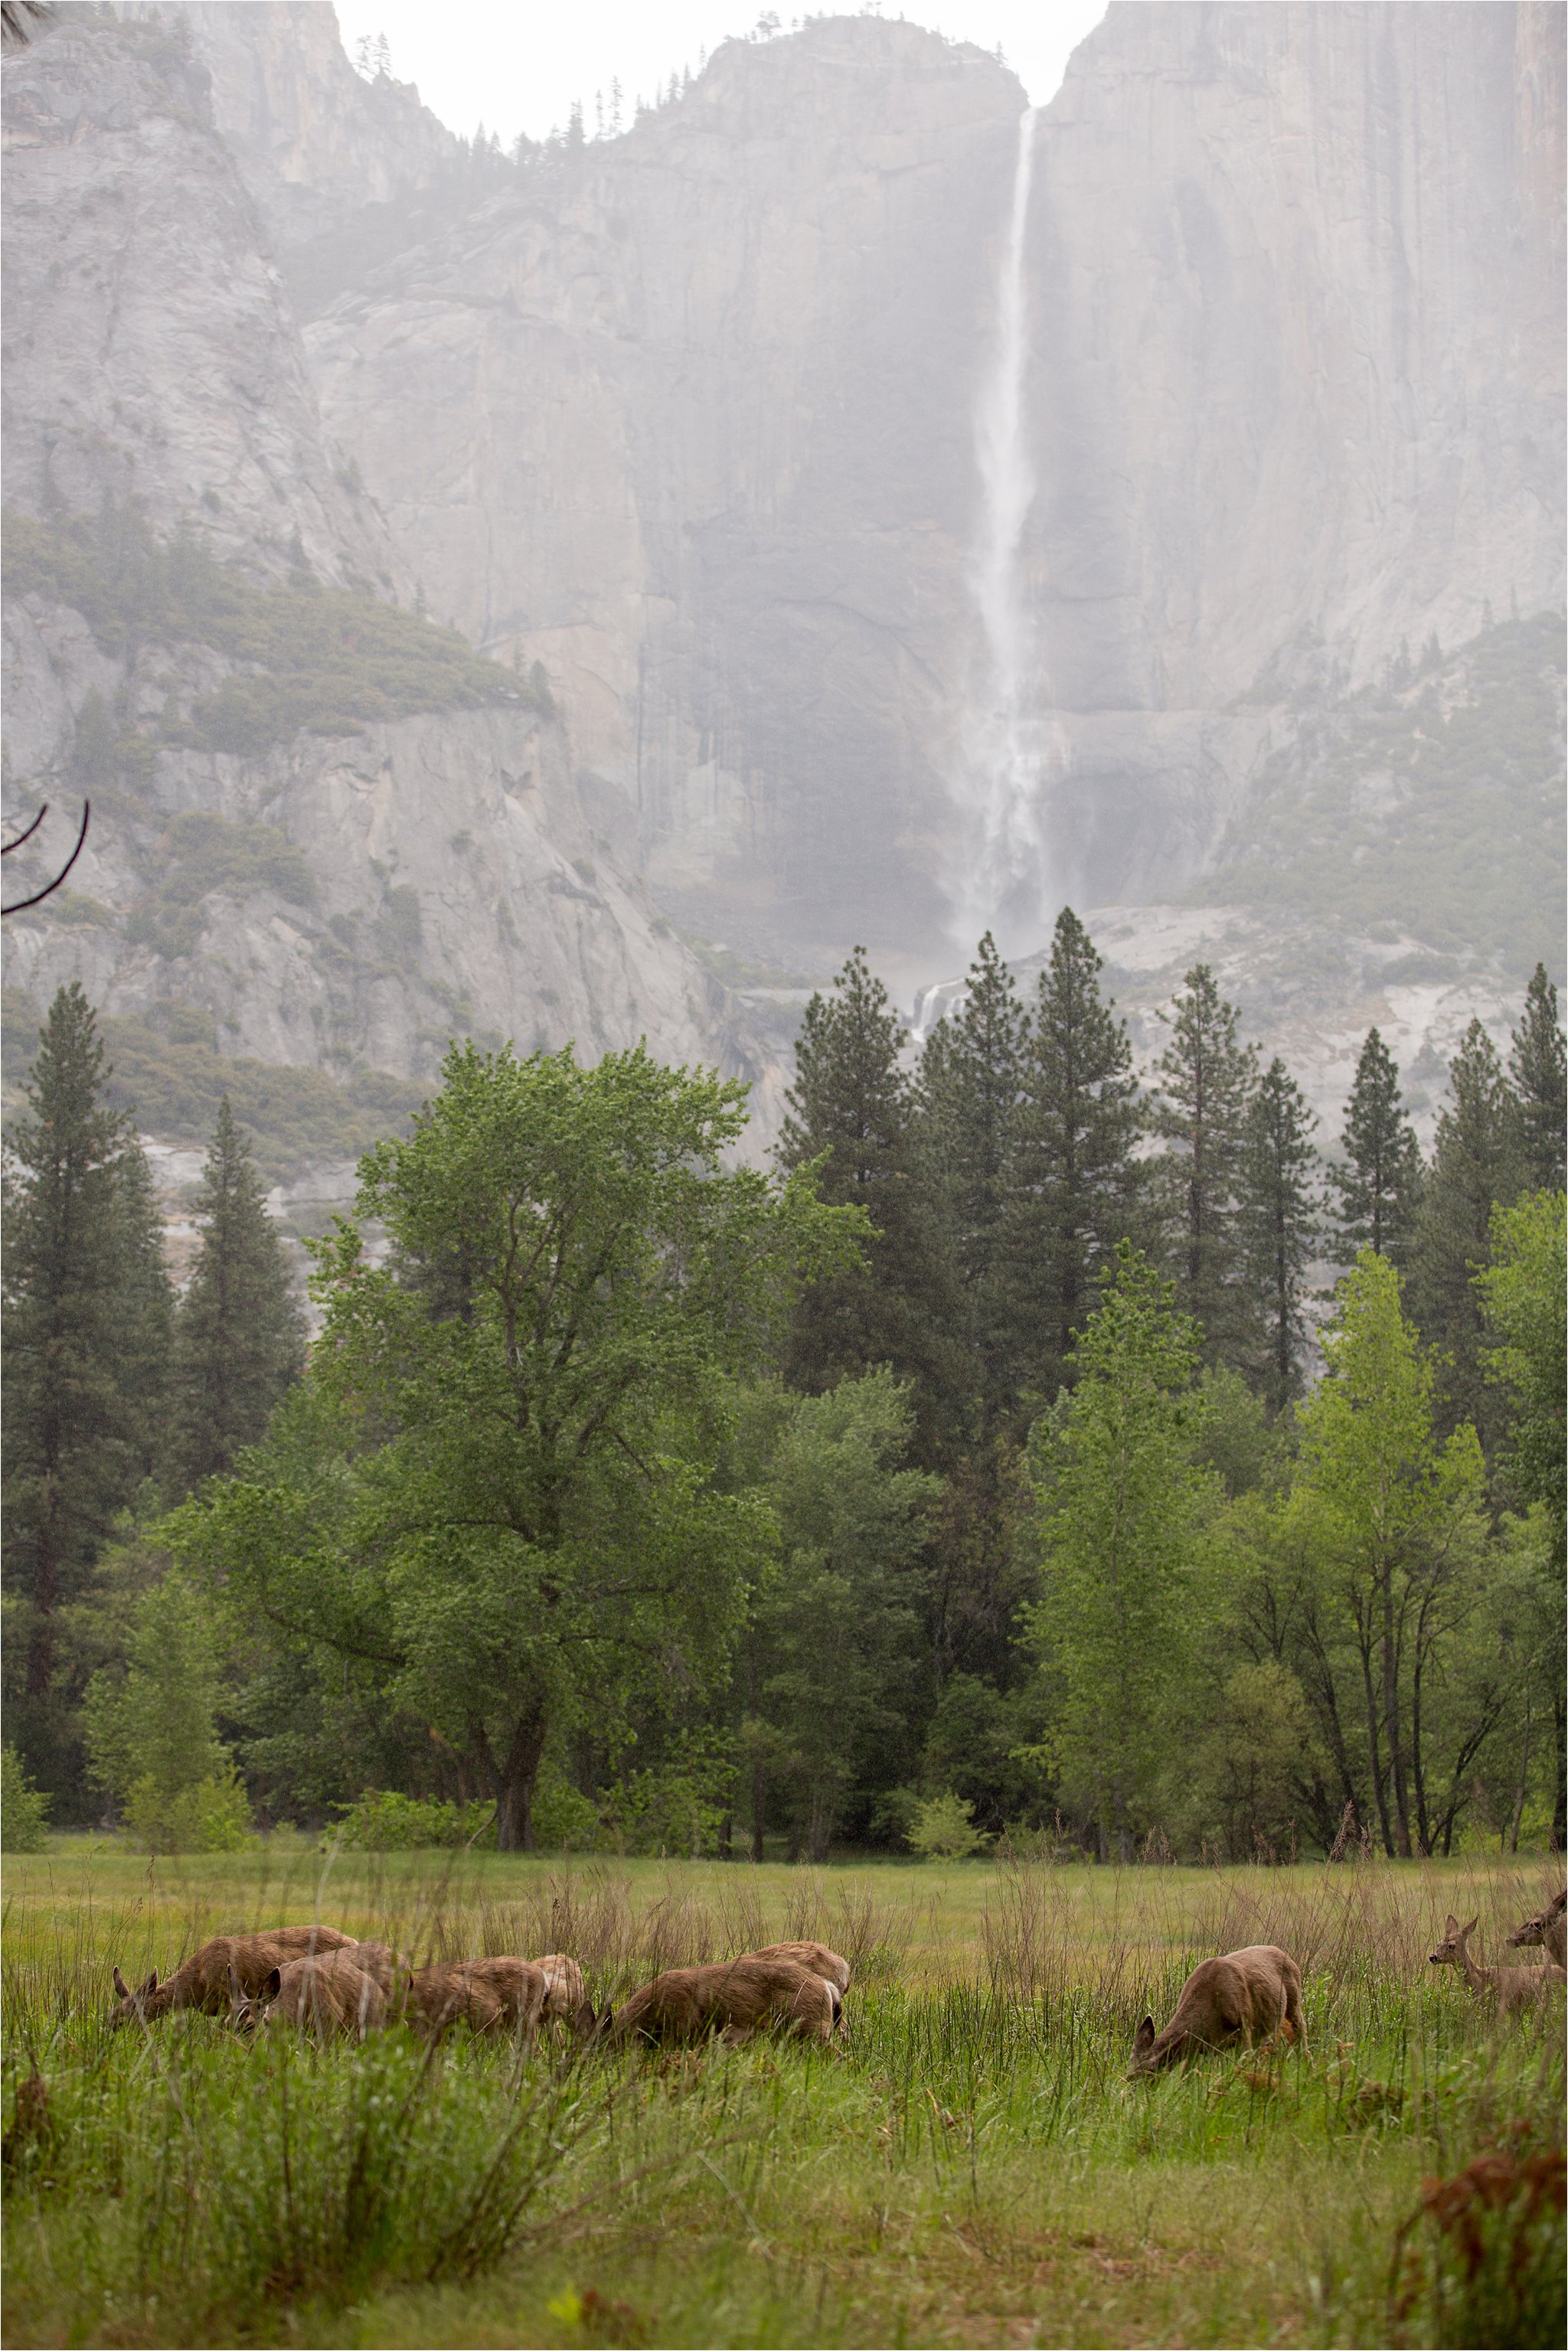 Waterfall and Deer in Yosemite National Park